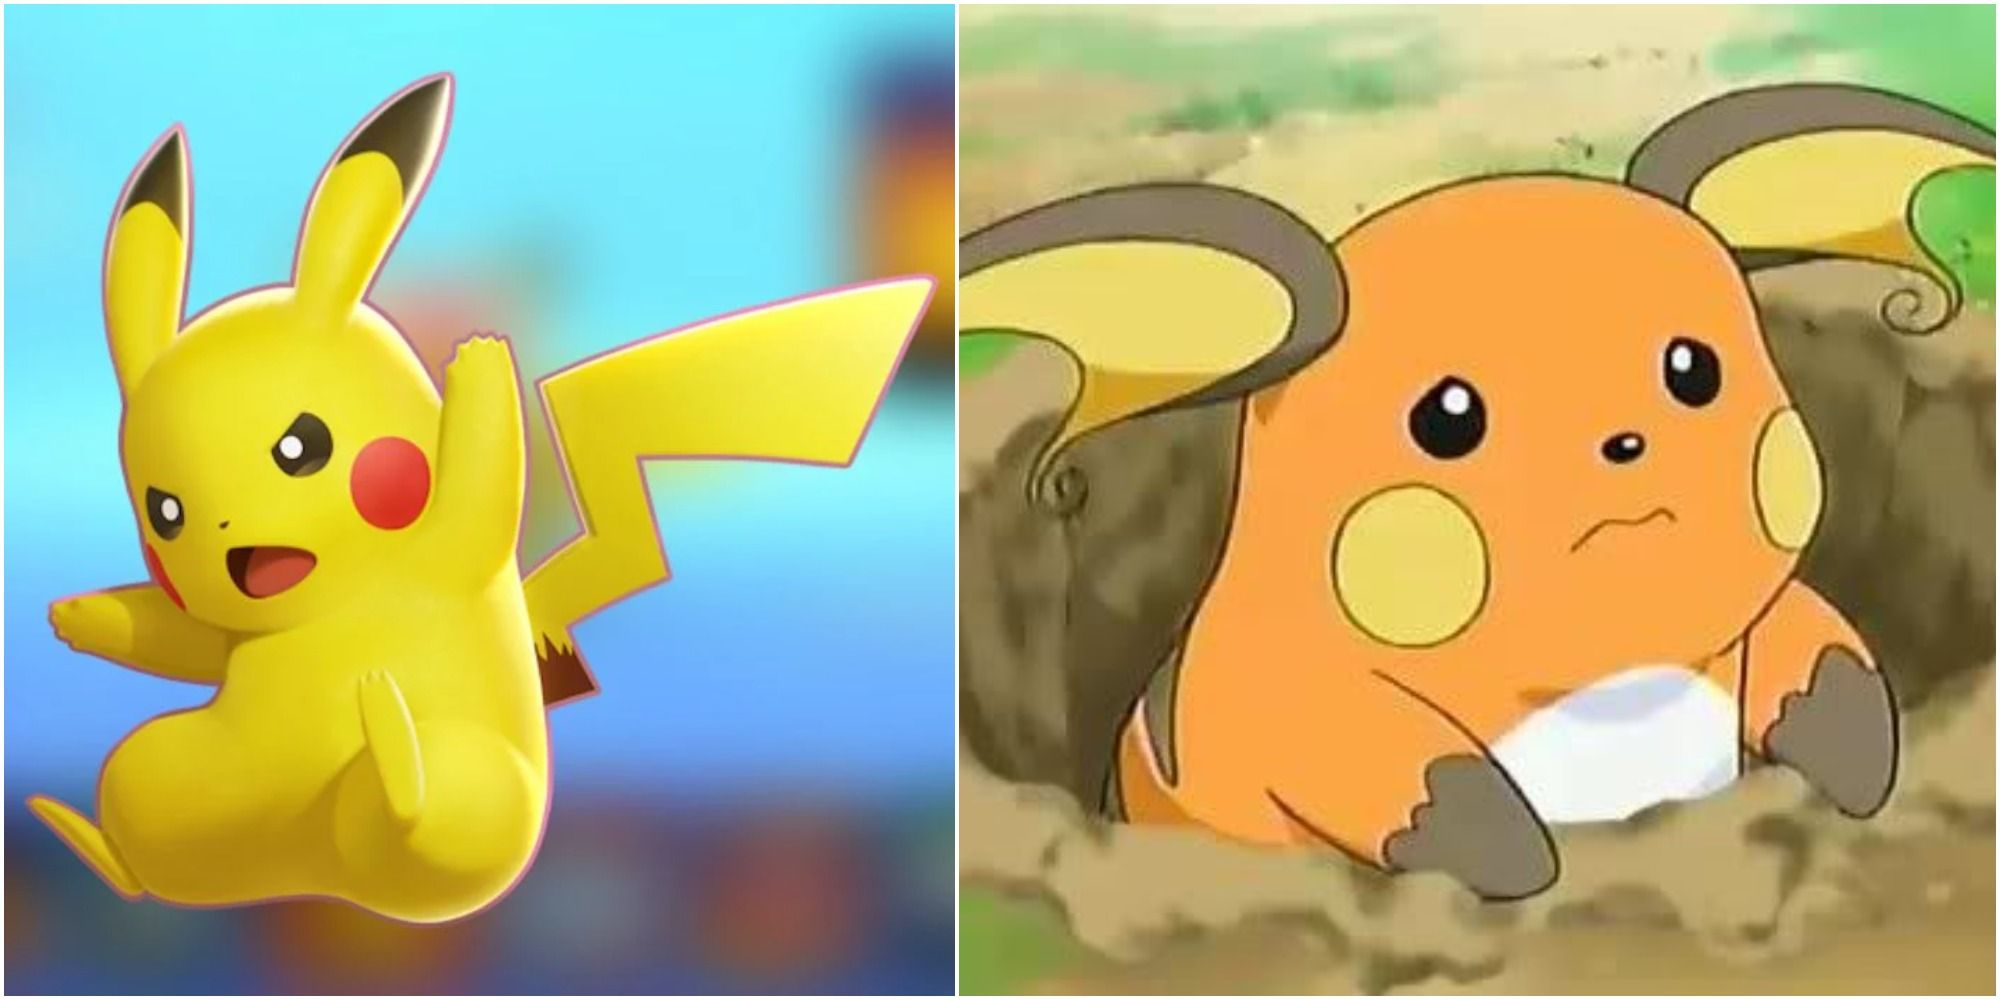 Pokémon Unite - Pikachu